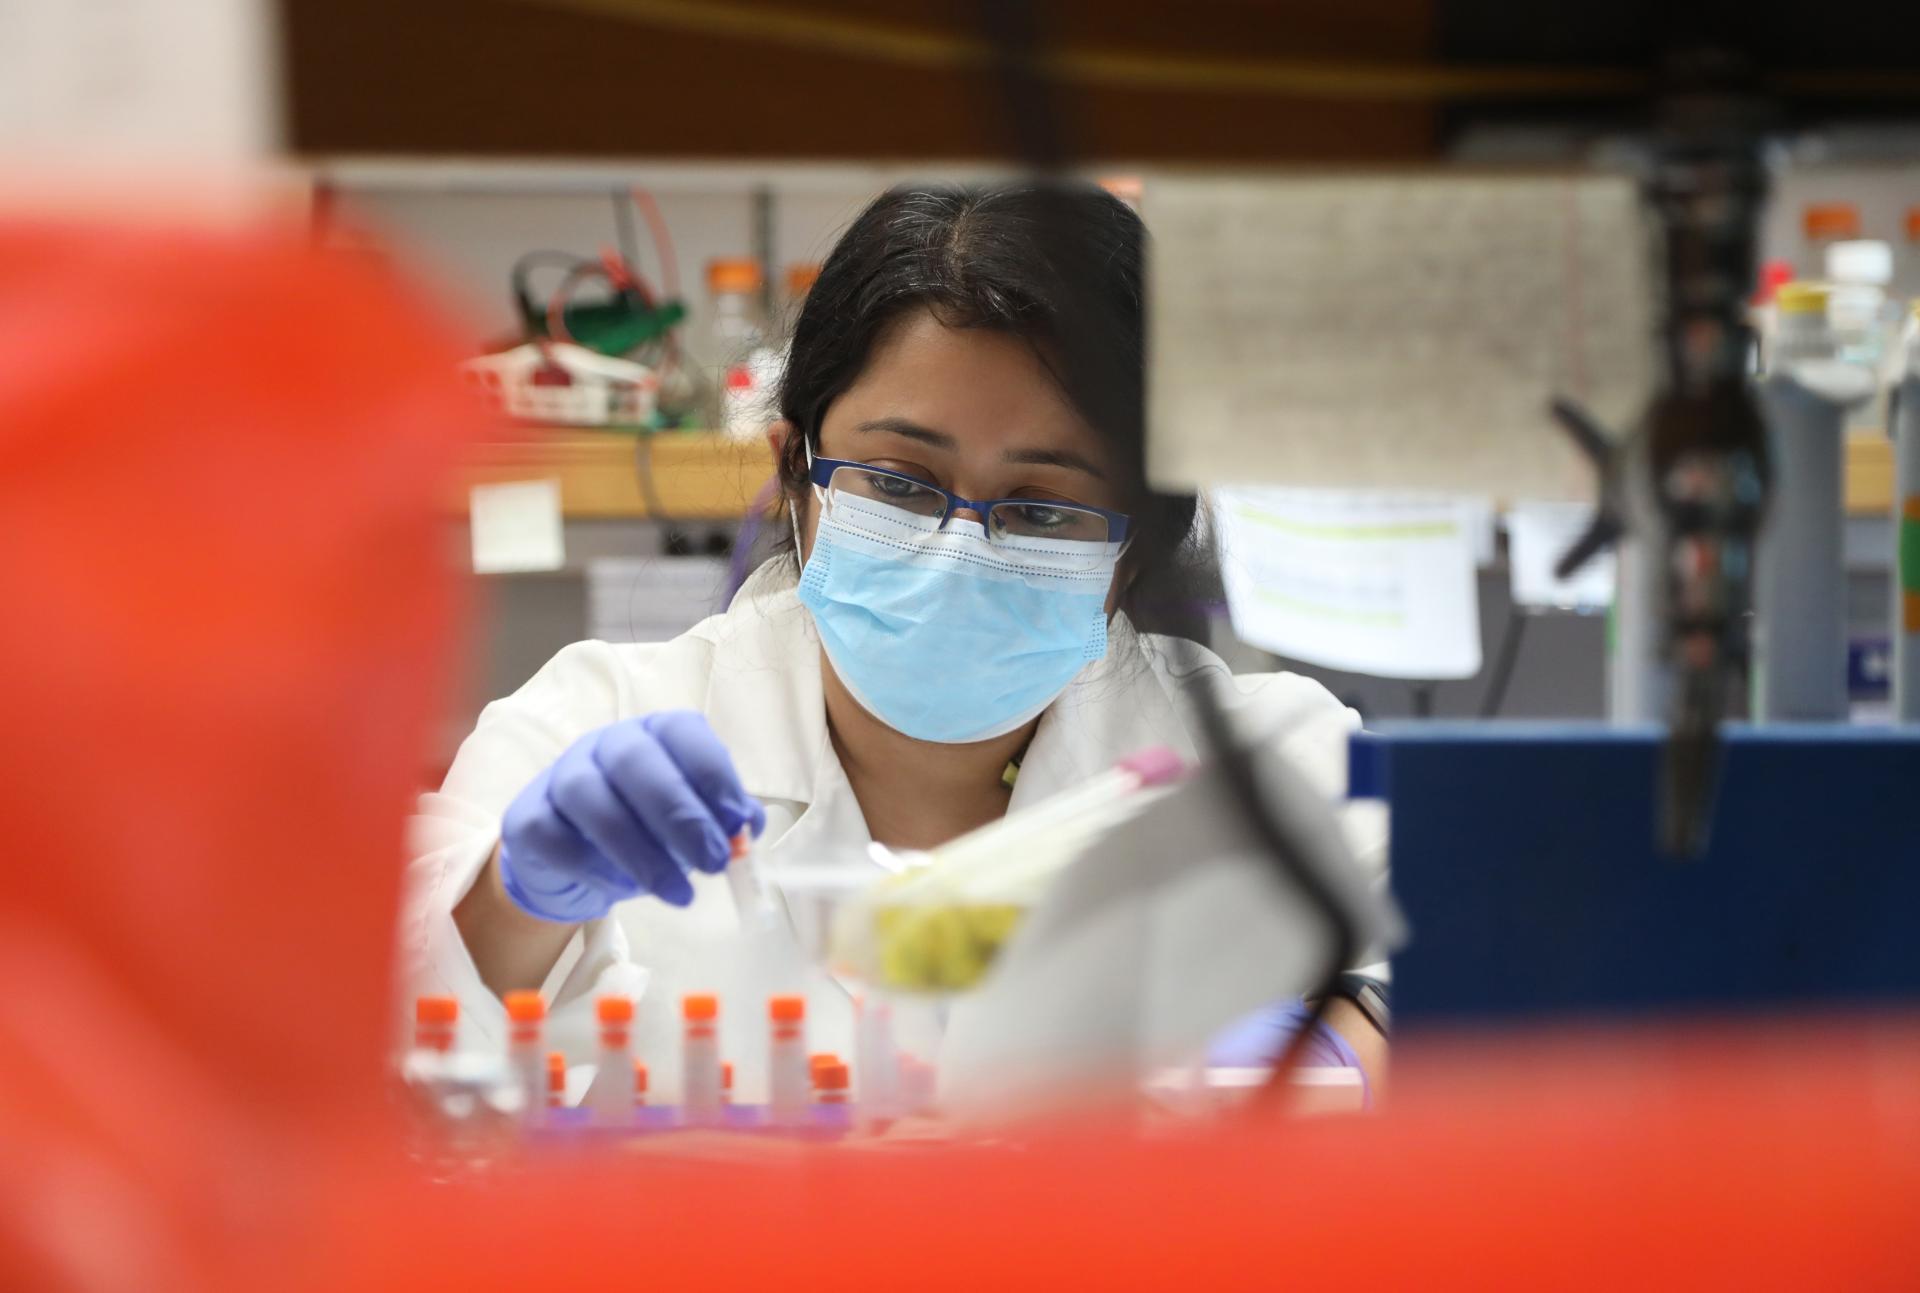 Binita Chakraborty working in a lab